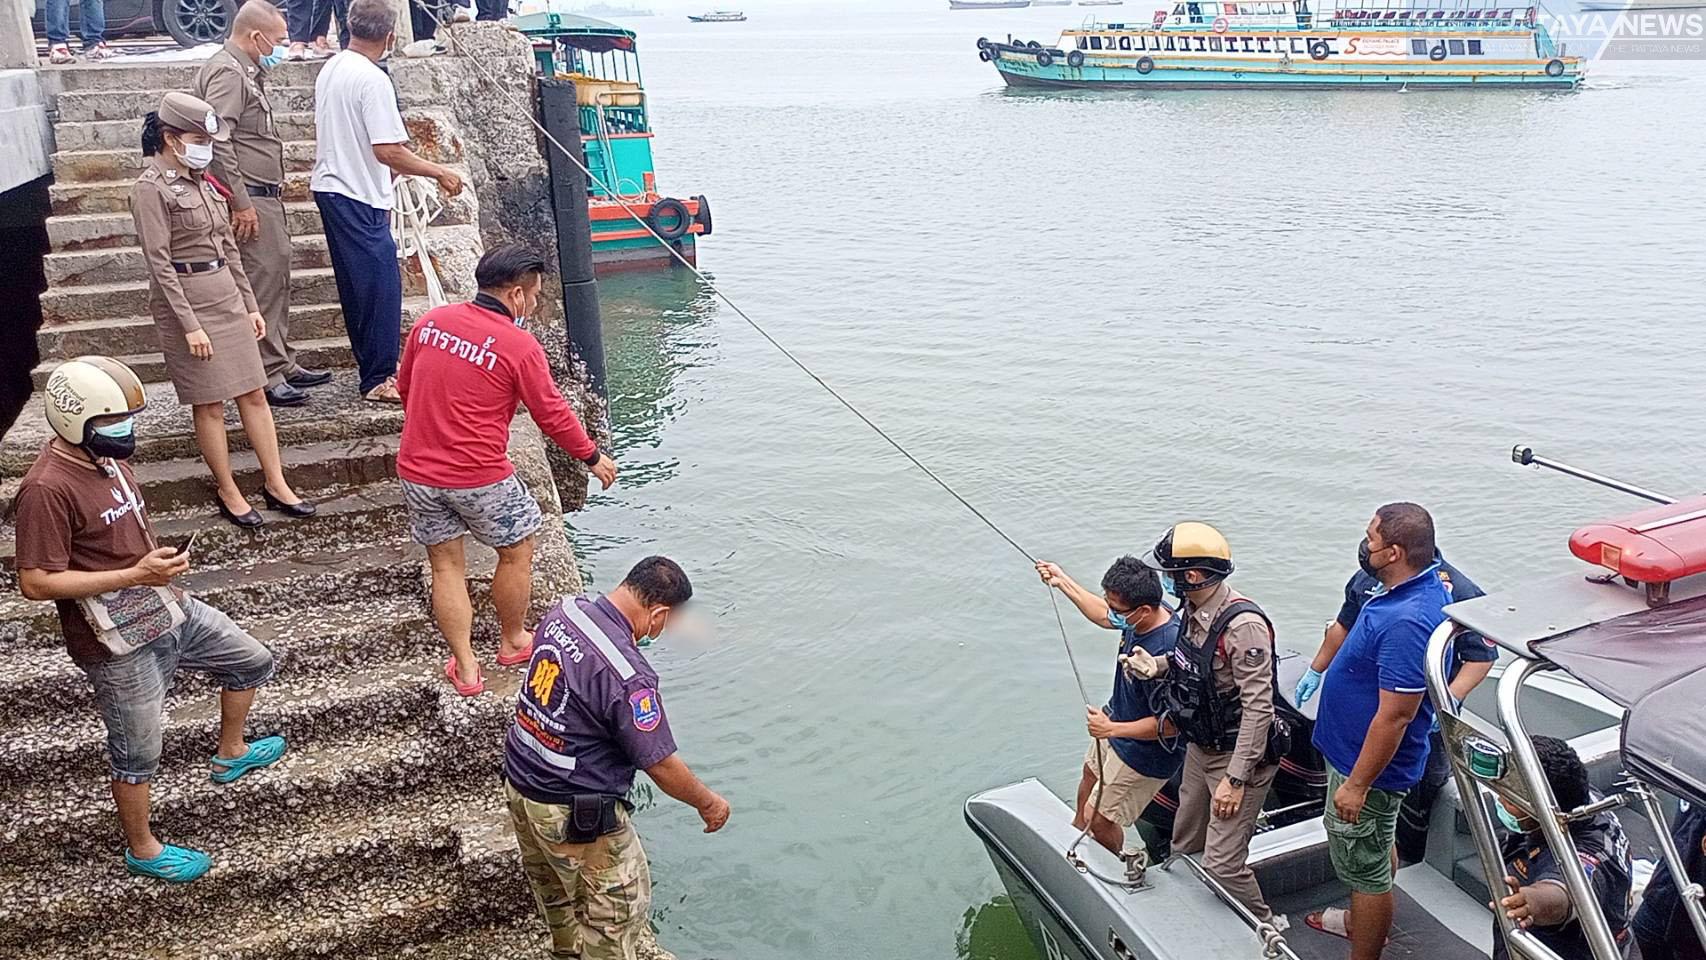 Unidentified male body found floating in Sri Racha sea by local fisherman